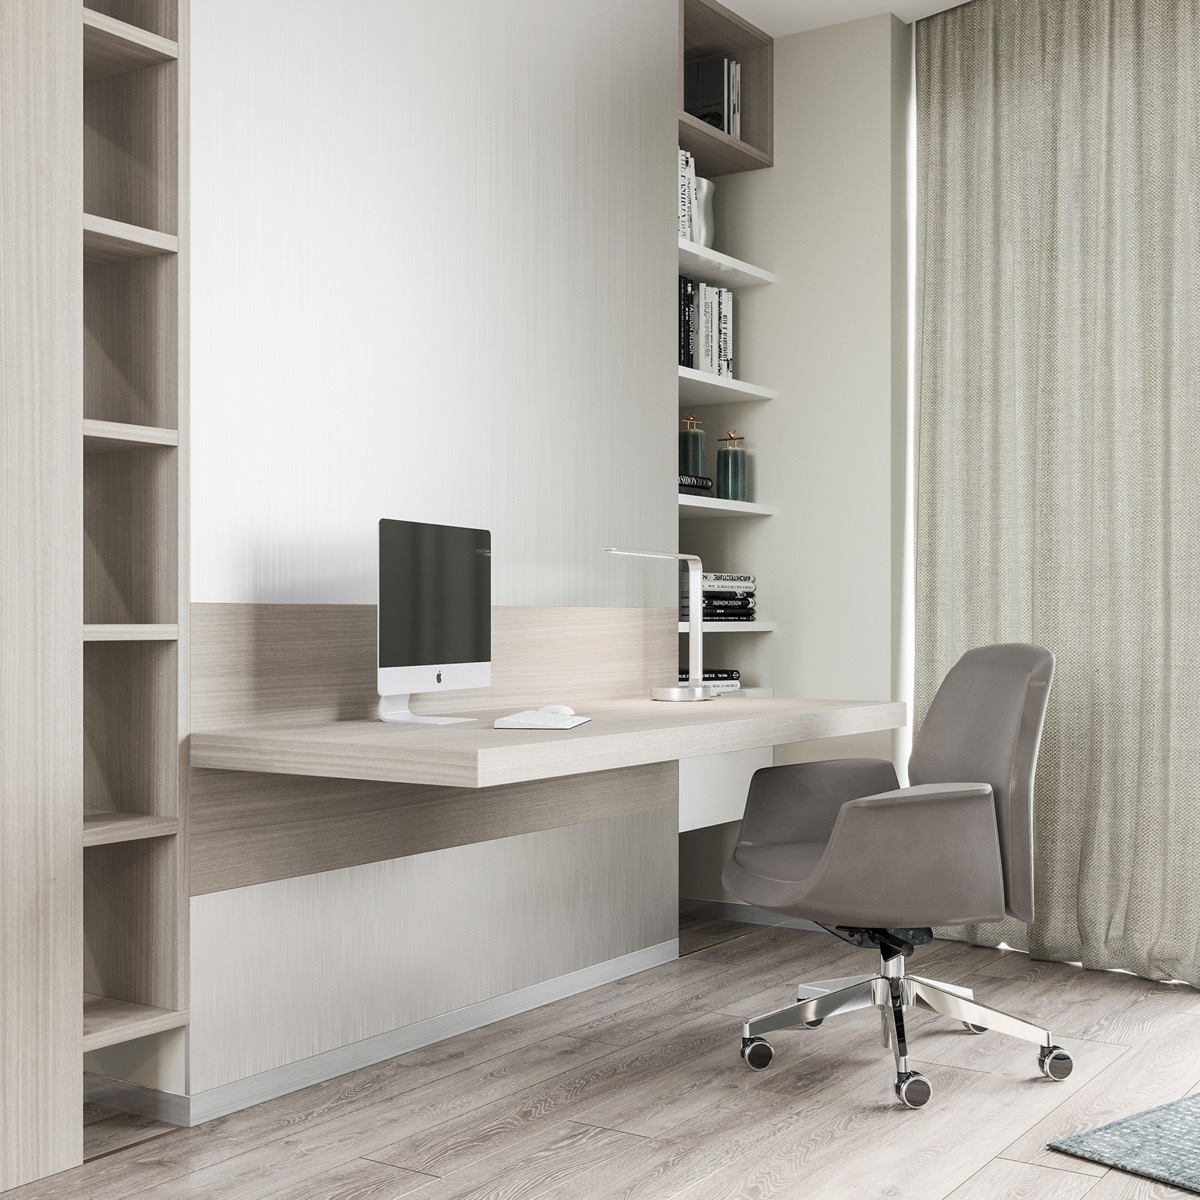 10 Minimalist Home Office Design Ideas For An Inspiring Workspace